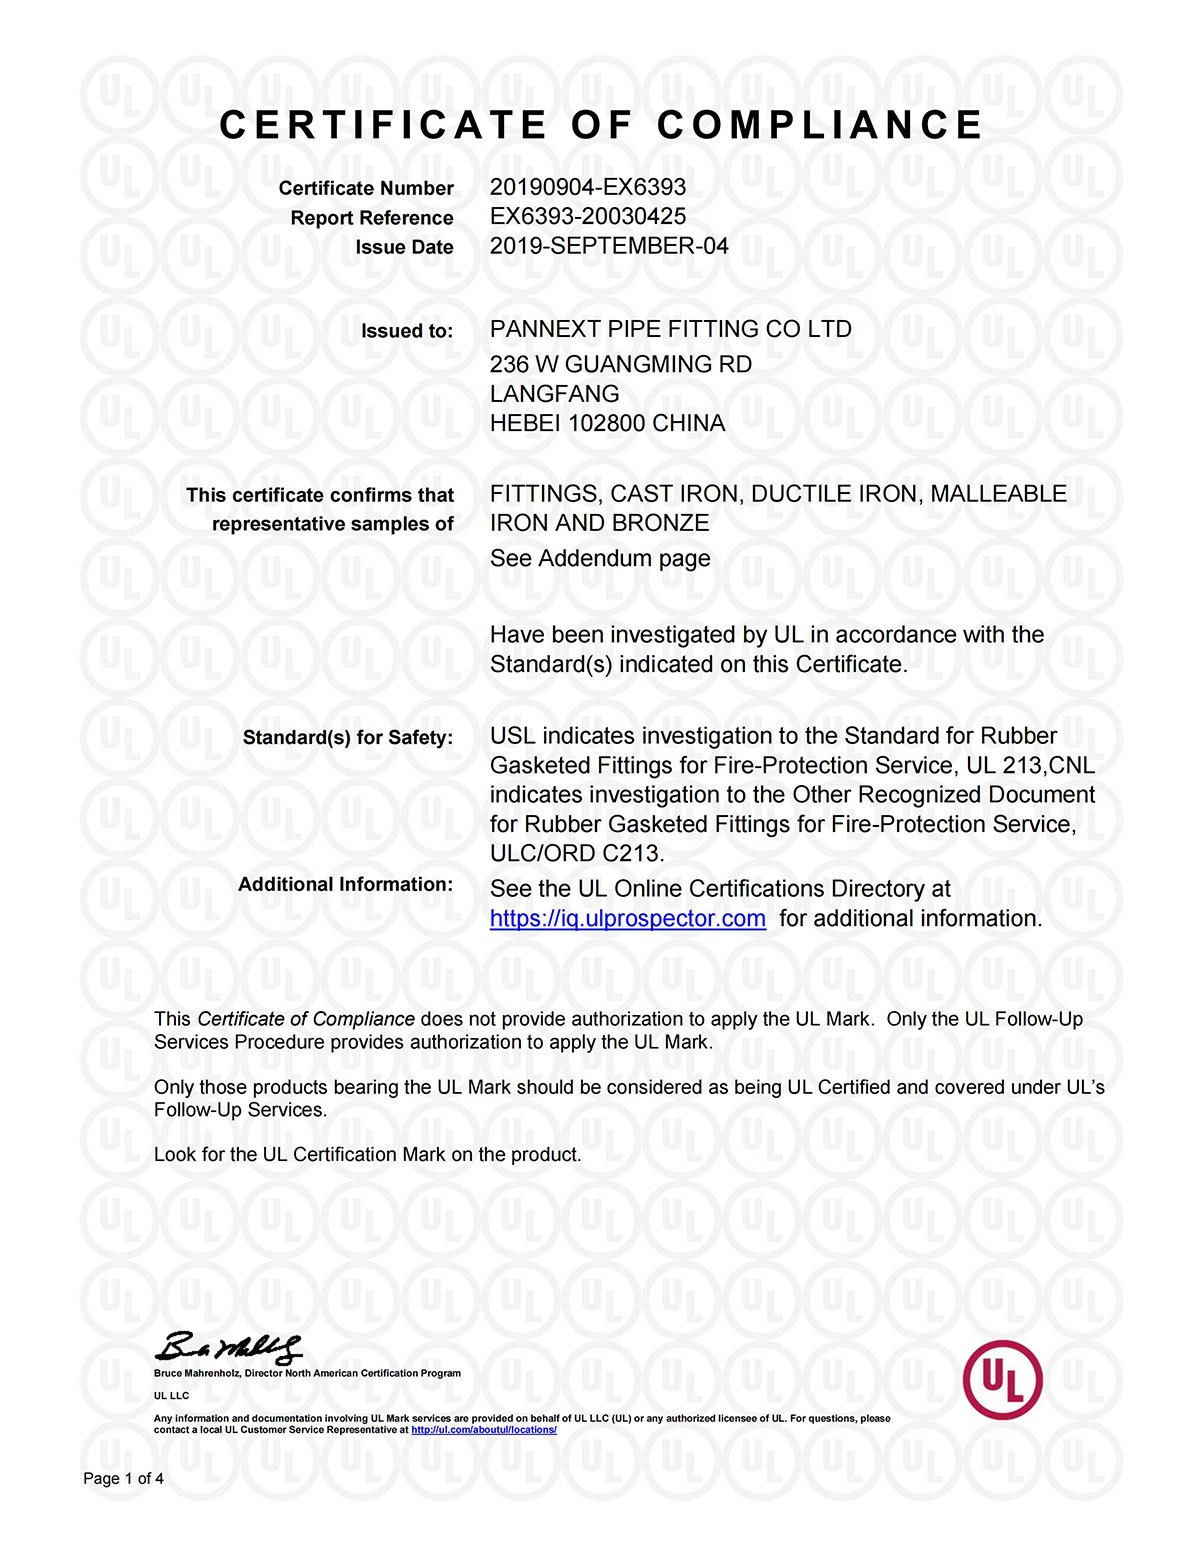 UL sertifikatas3-0